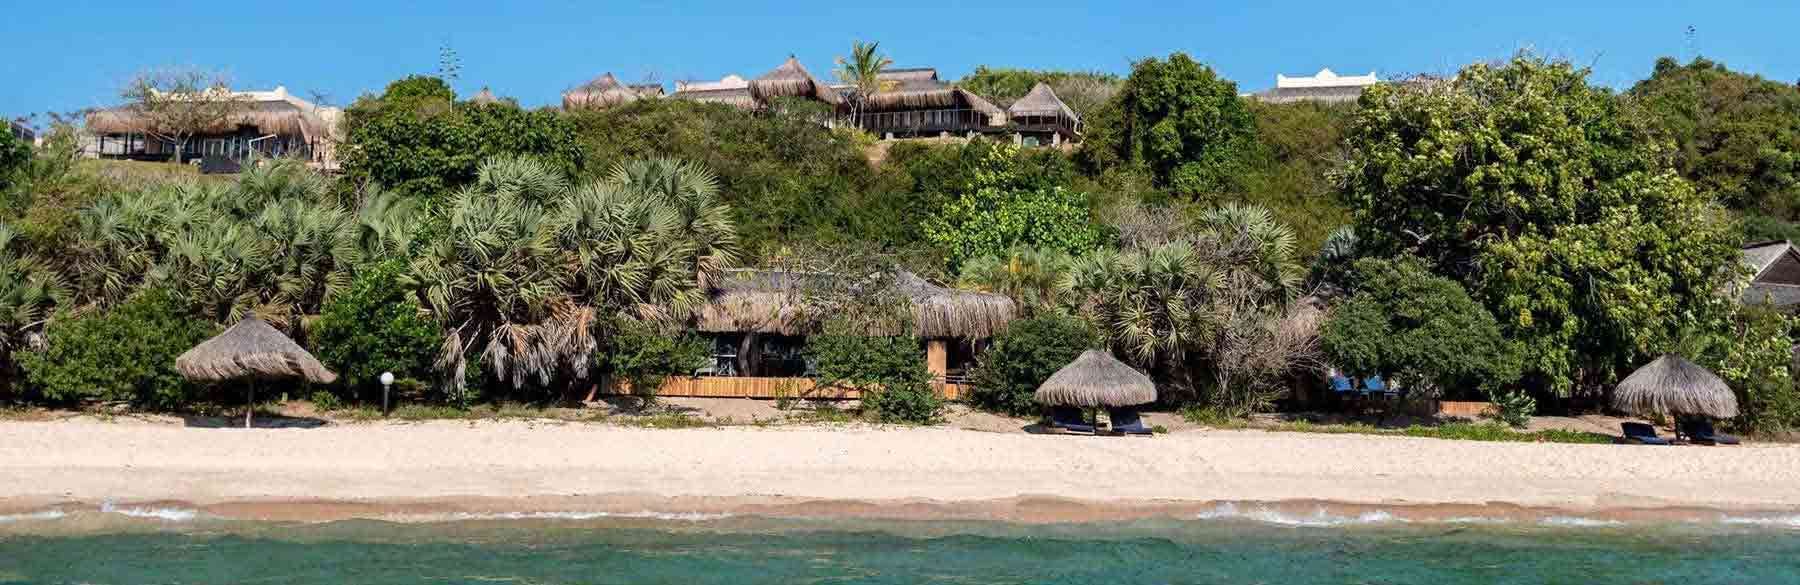 Anantara Bazaruto Island Resort and Spa